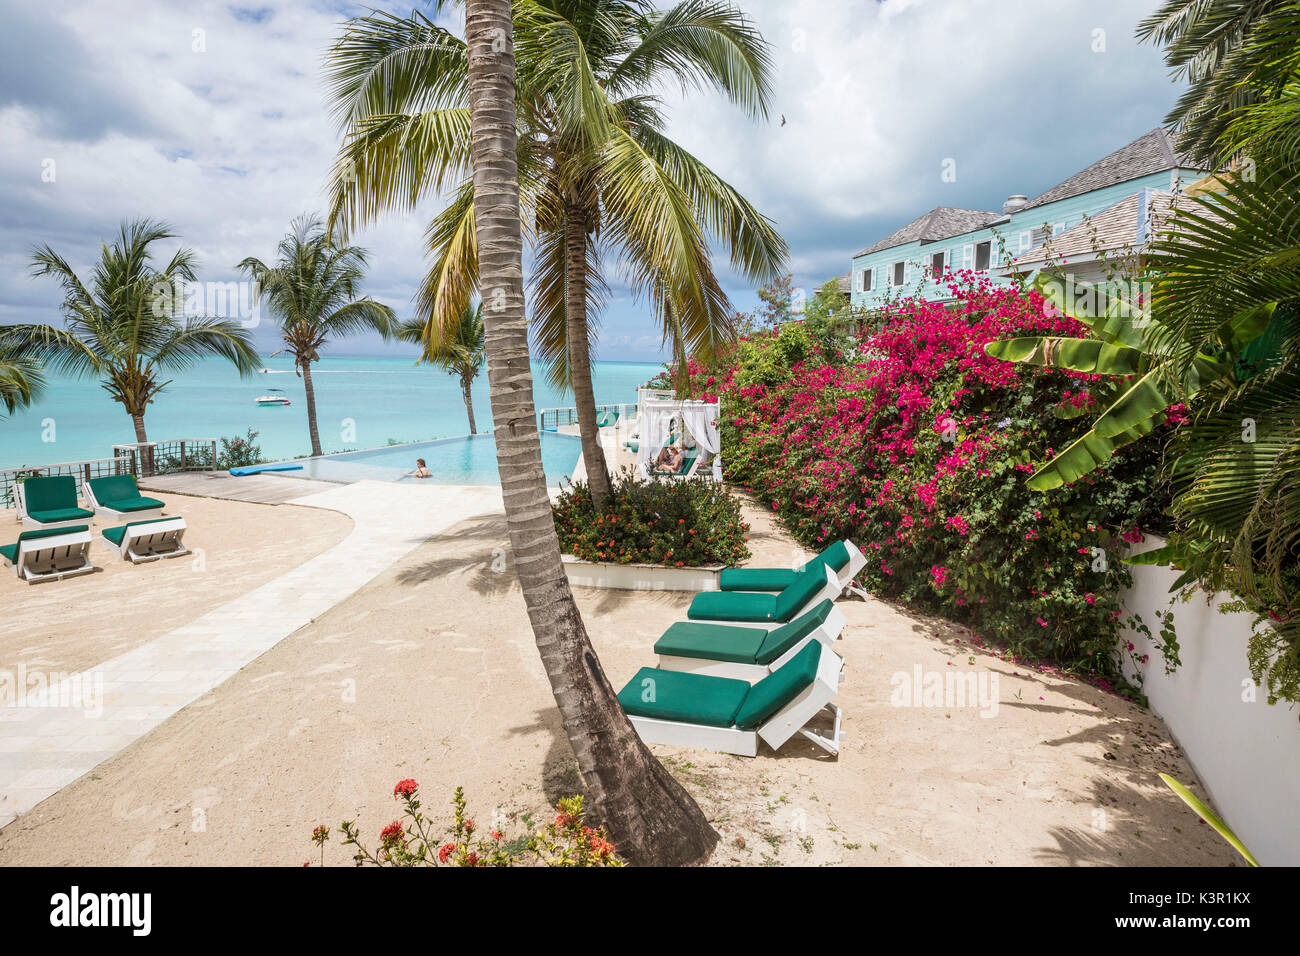 Sunbeds and palm trees overlooking the Caribbean Sea Ffryes Beach Sheer Rocks Antigua and Barbuda Leeward Island West Indies Stock Photo